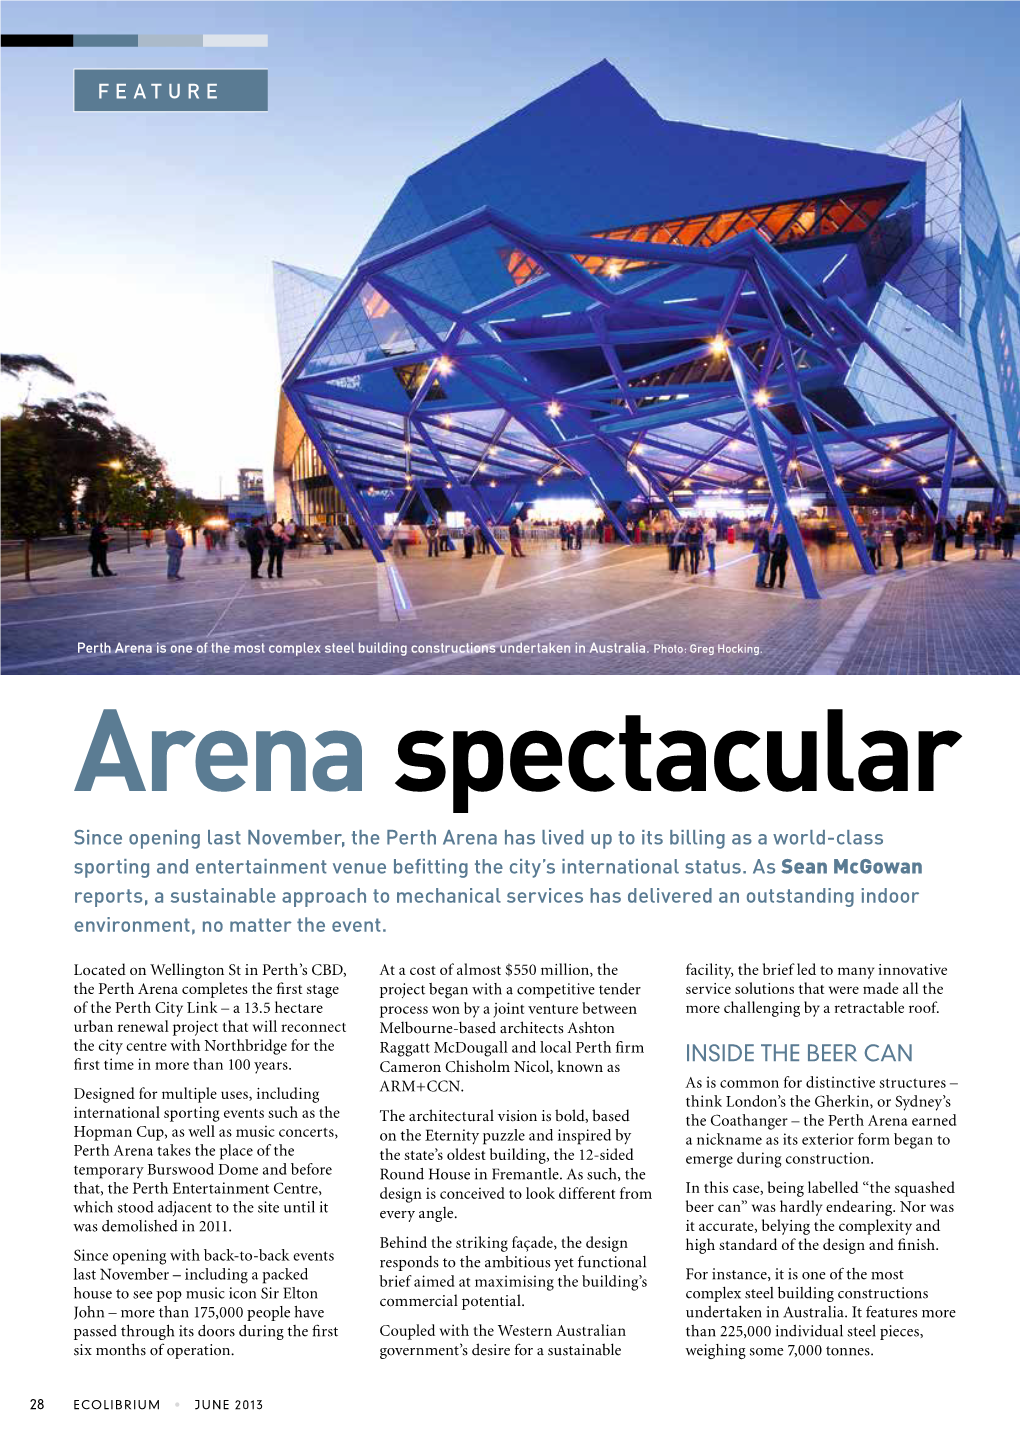 Arena Spectacular